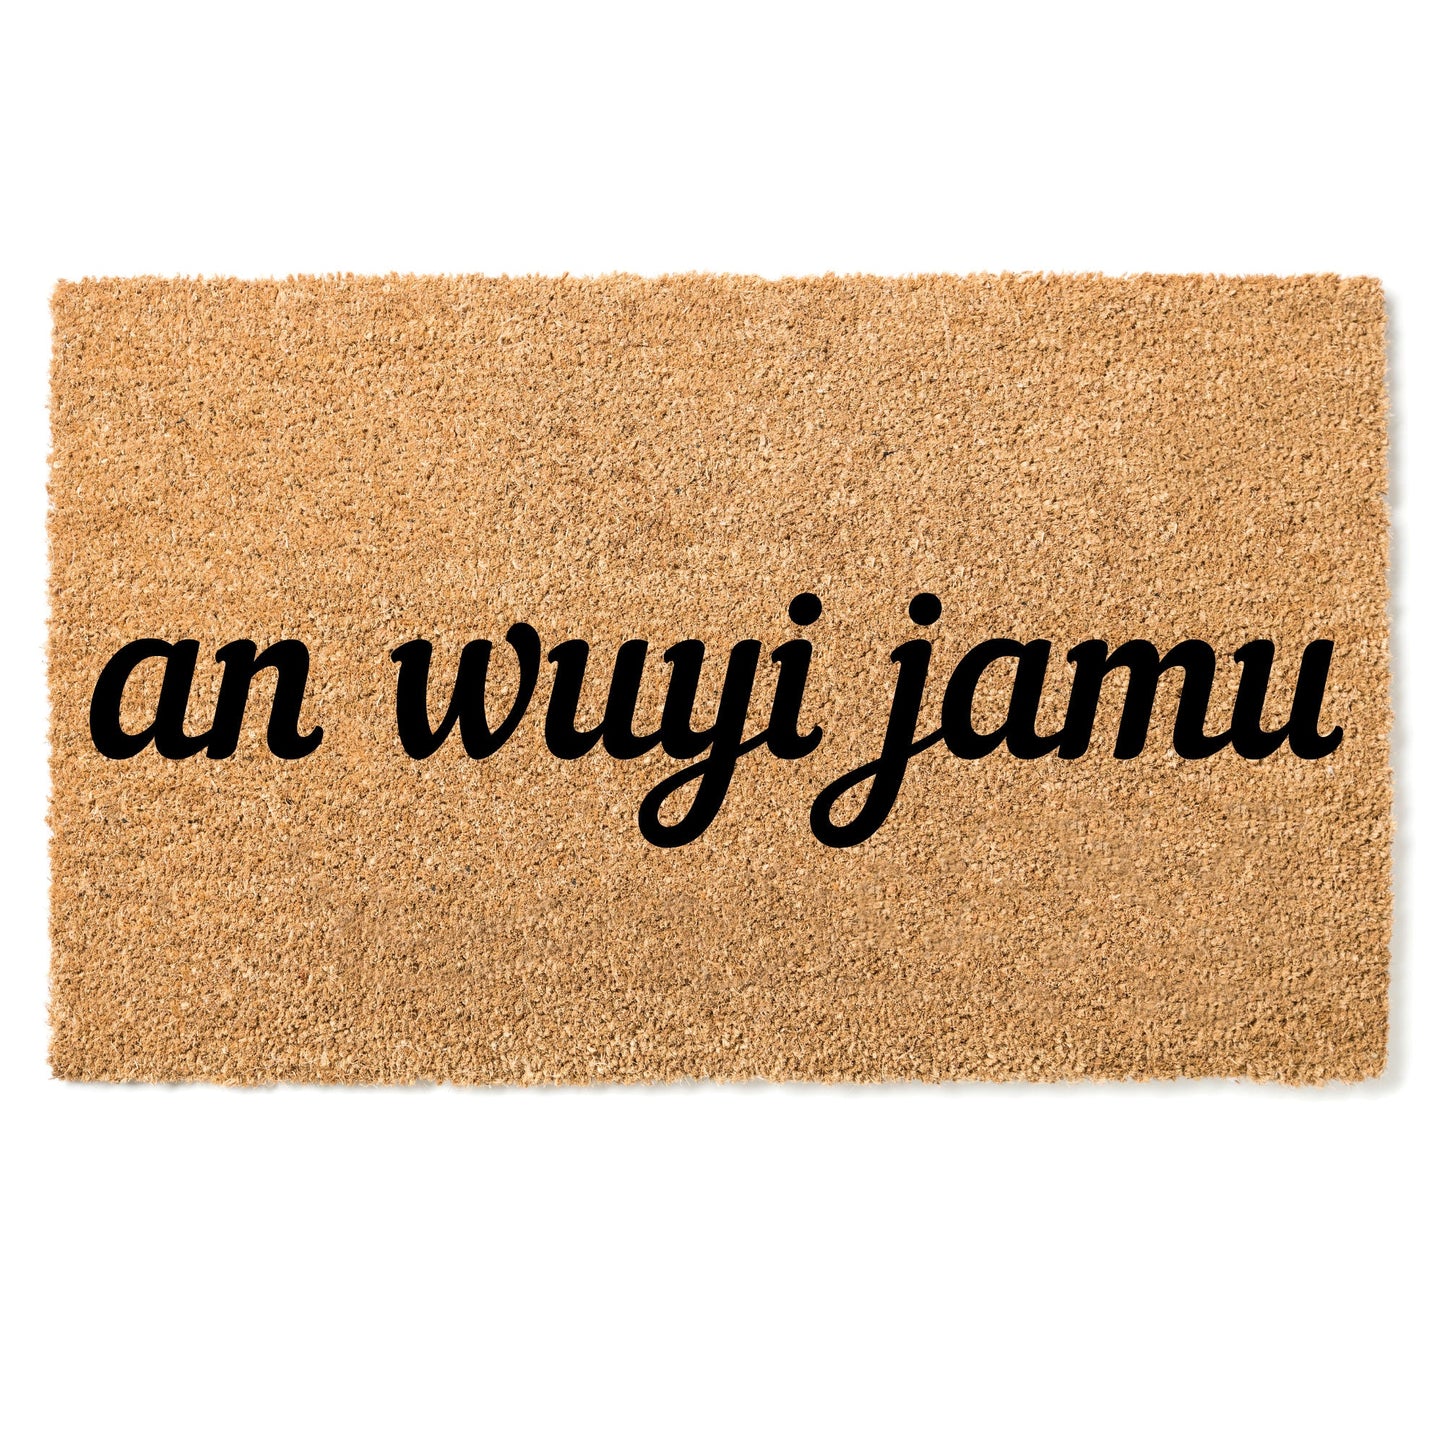 "An wuyi jamu" door mat - Greeting in Soninké